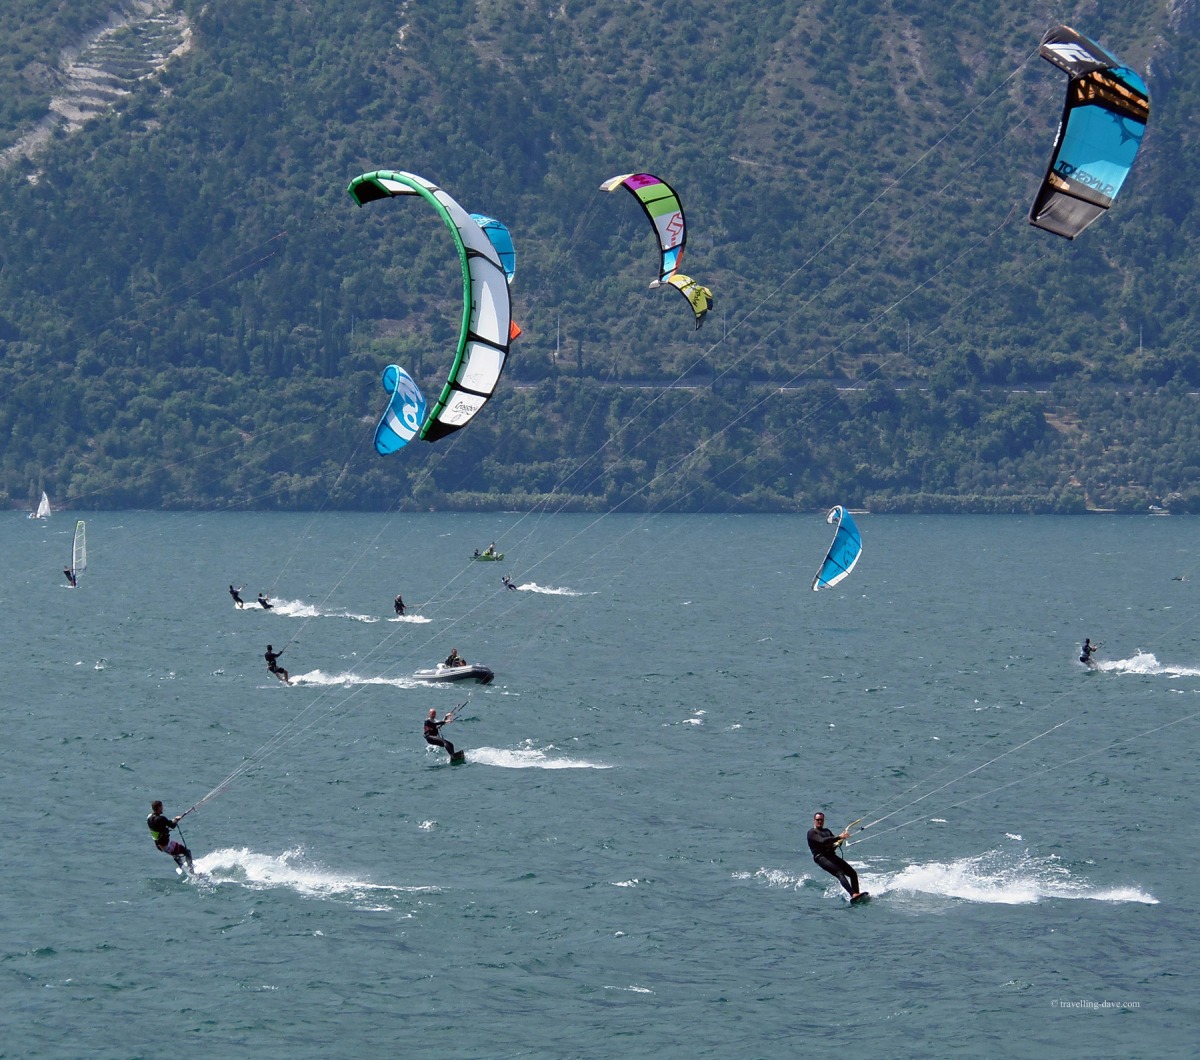 Kitesurfers on the lake in Italy